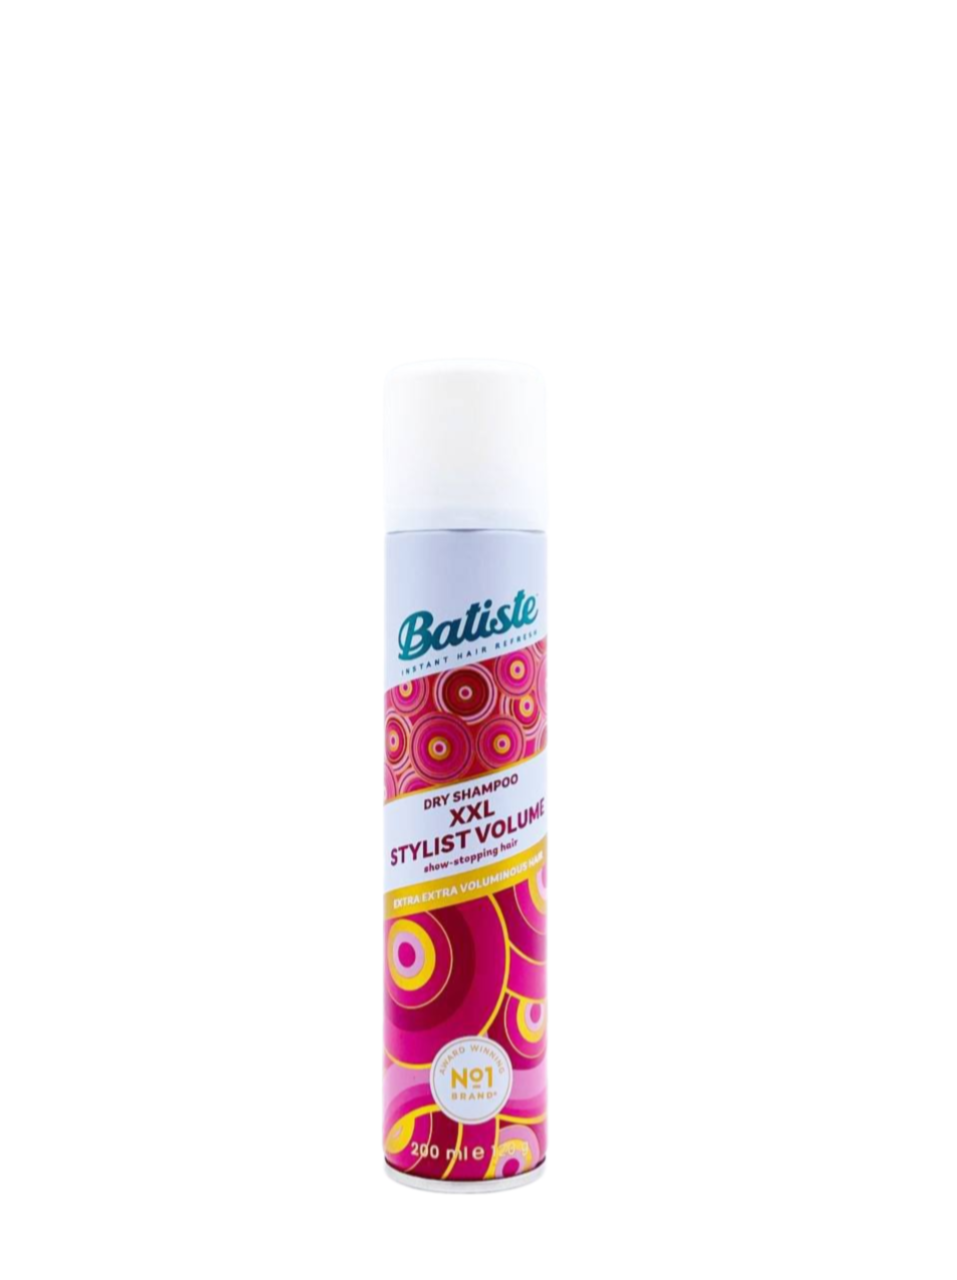 Cухой шампунь для экстра объема волос - Batiste XXL Stilist Volume spray 